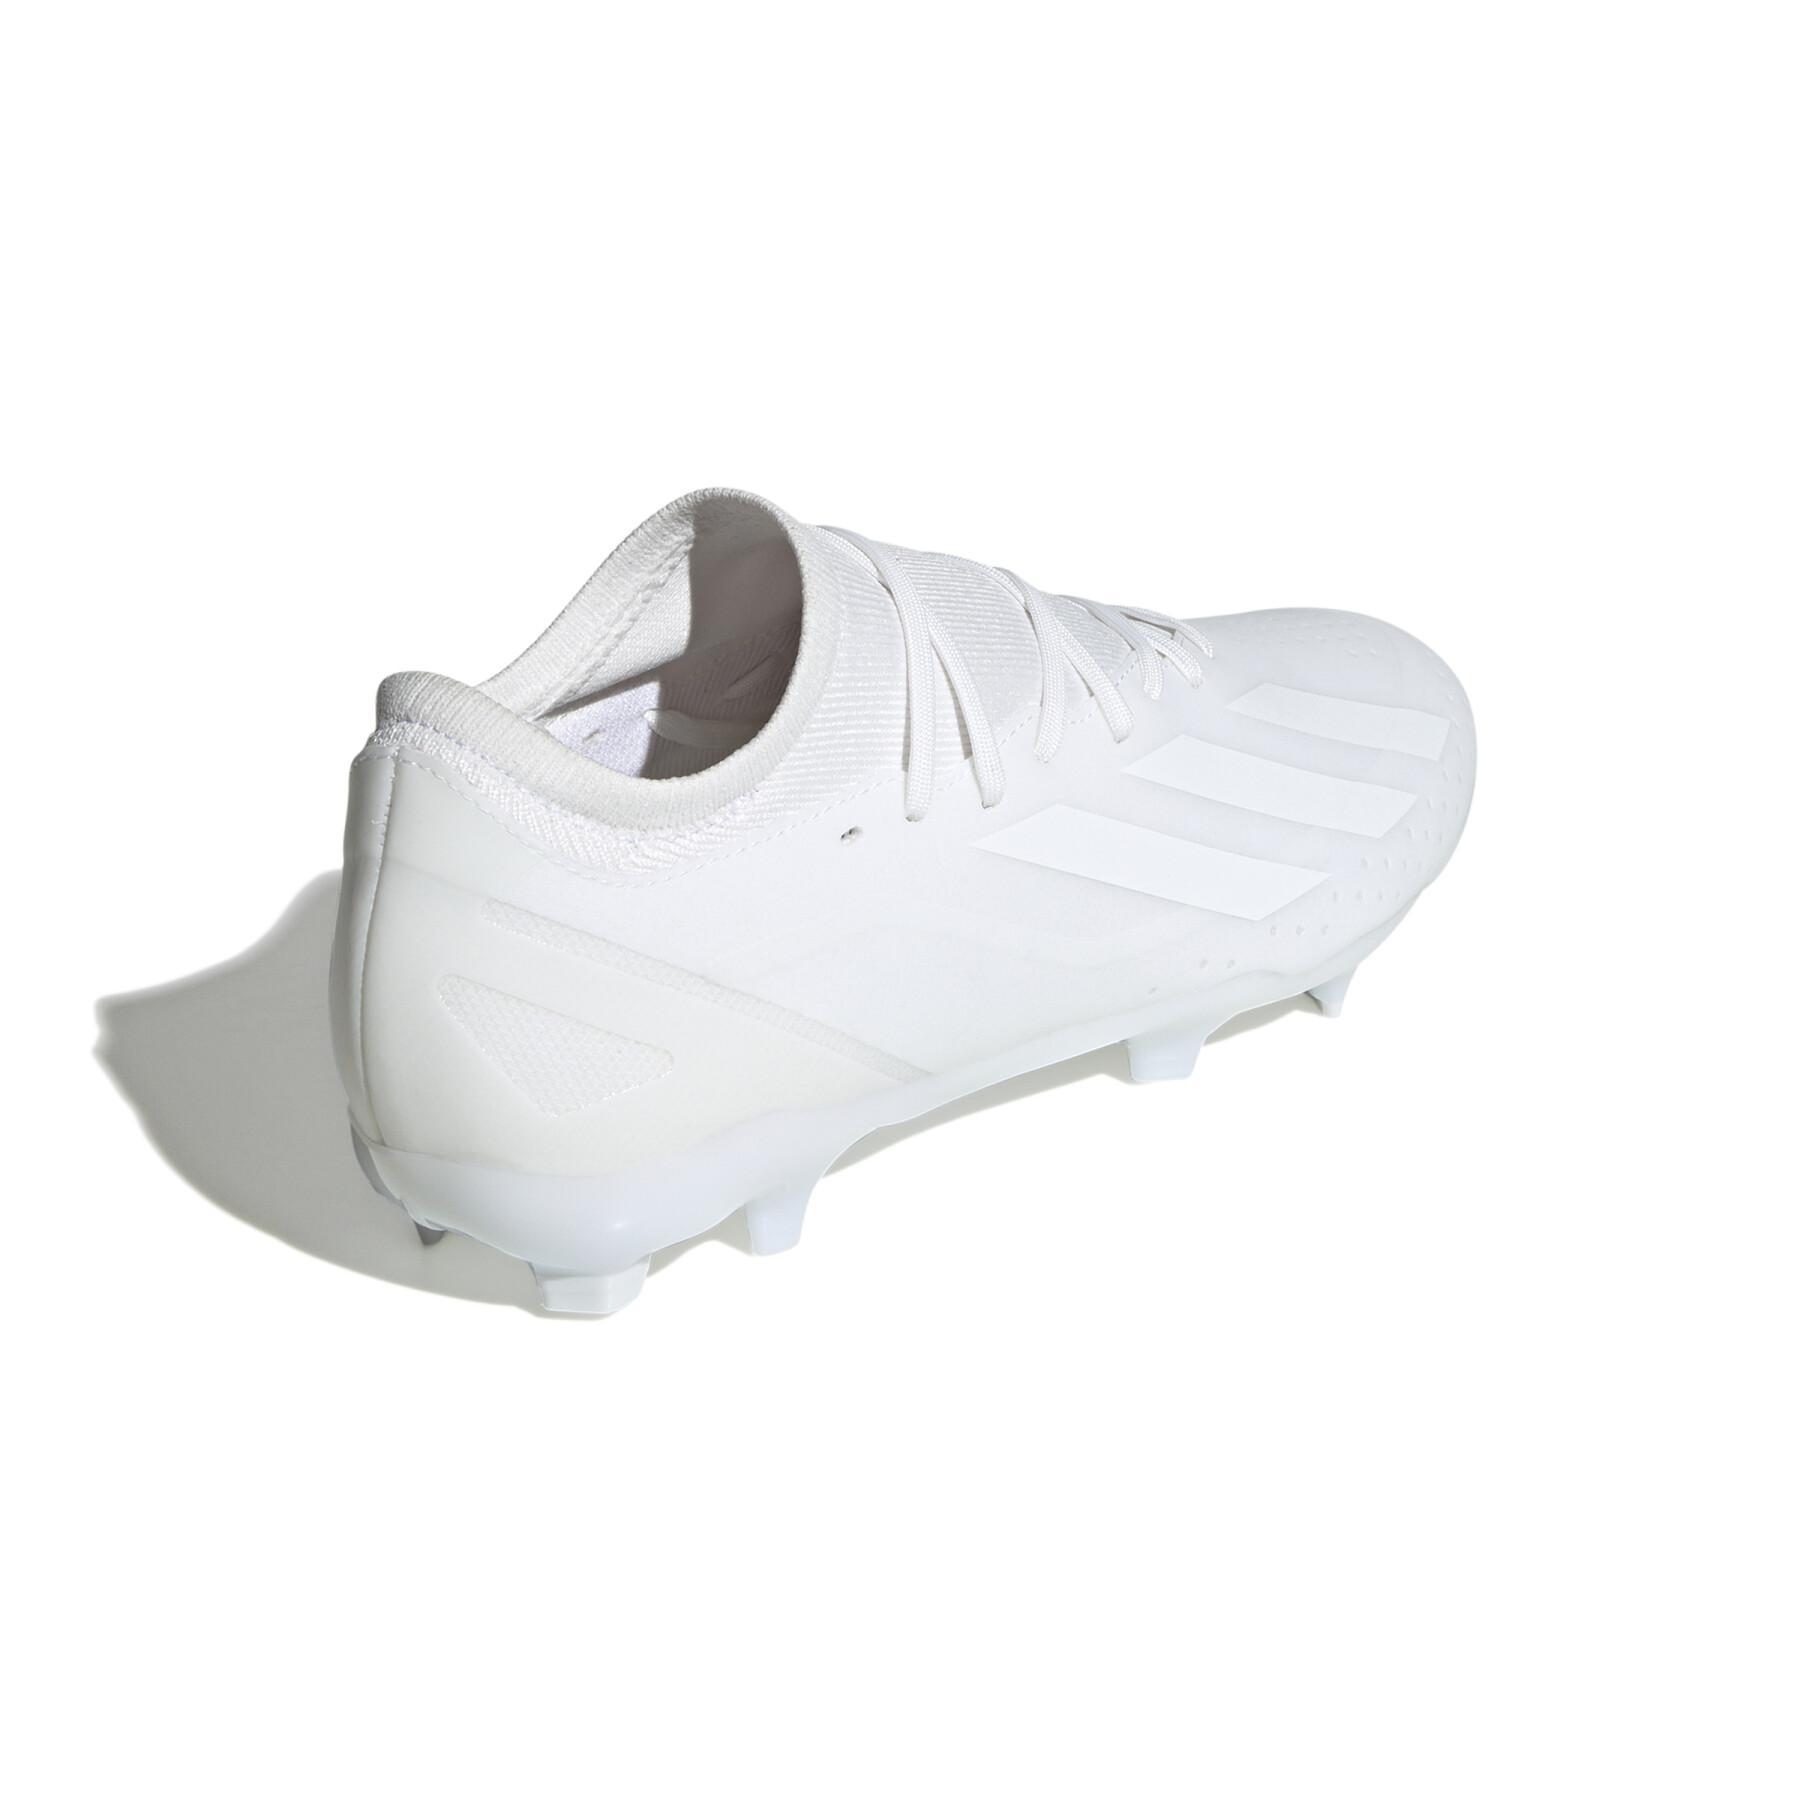 Chaussures de football enfant adidas X Crazyfast.3 FG